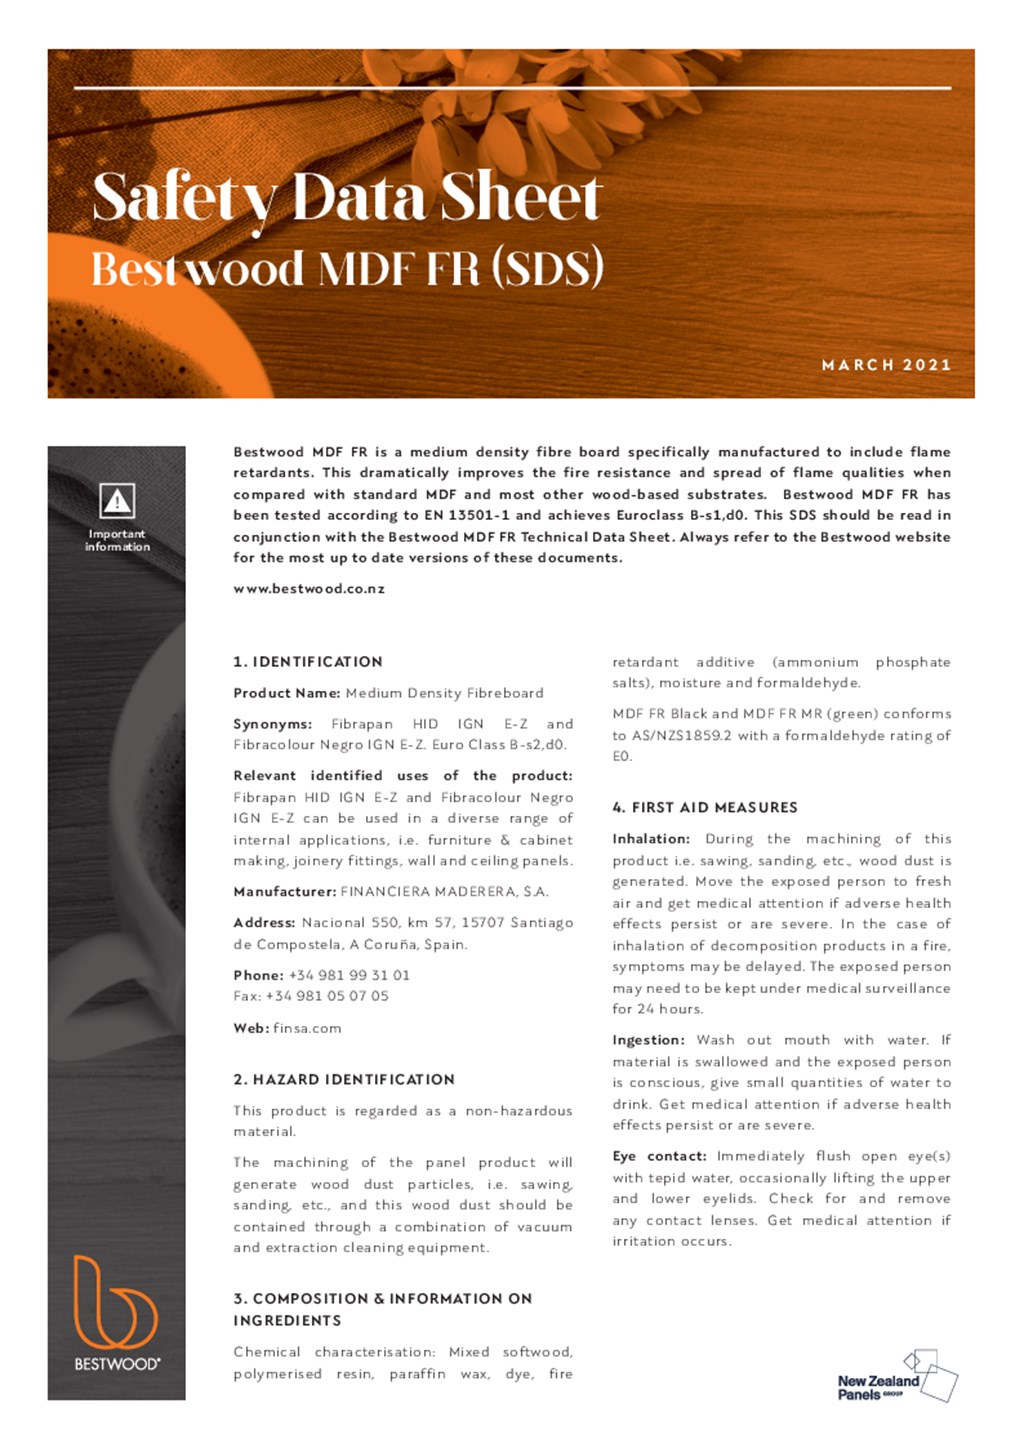 Bestwood MDF FR Safety Data Sheet